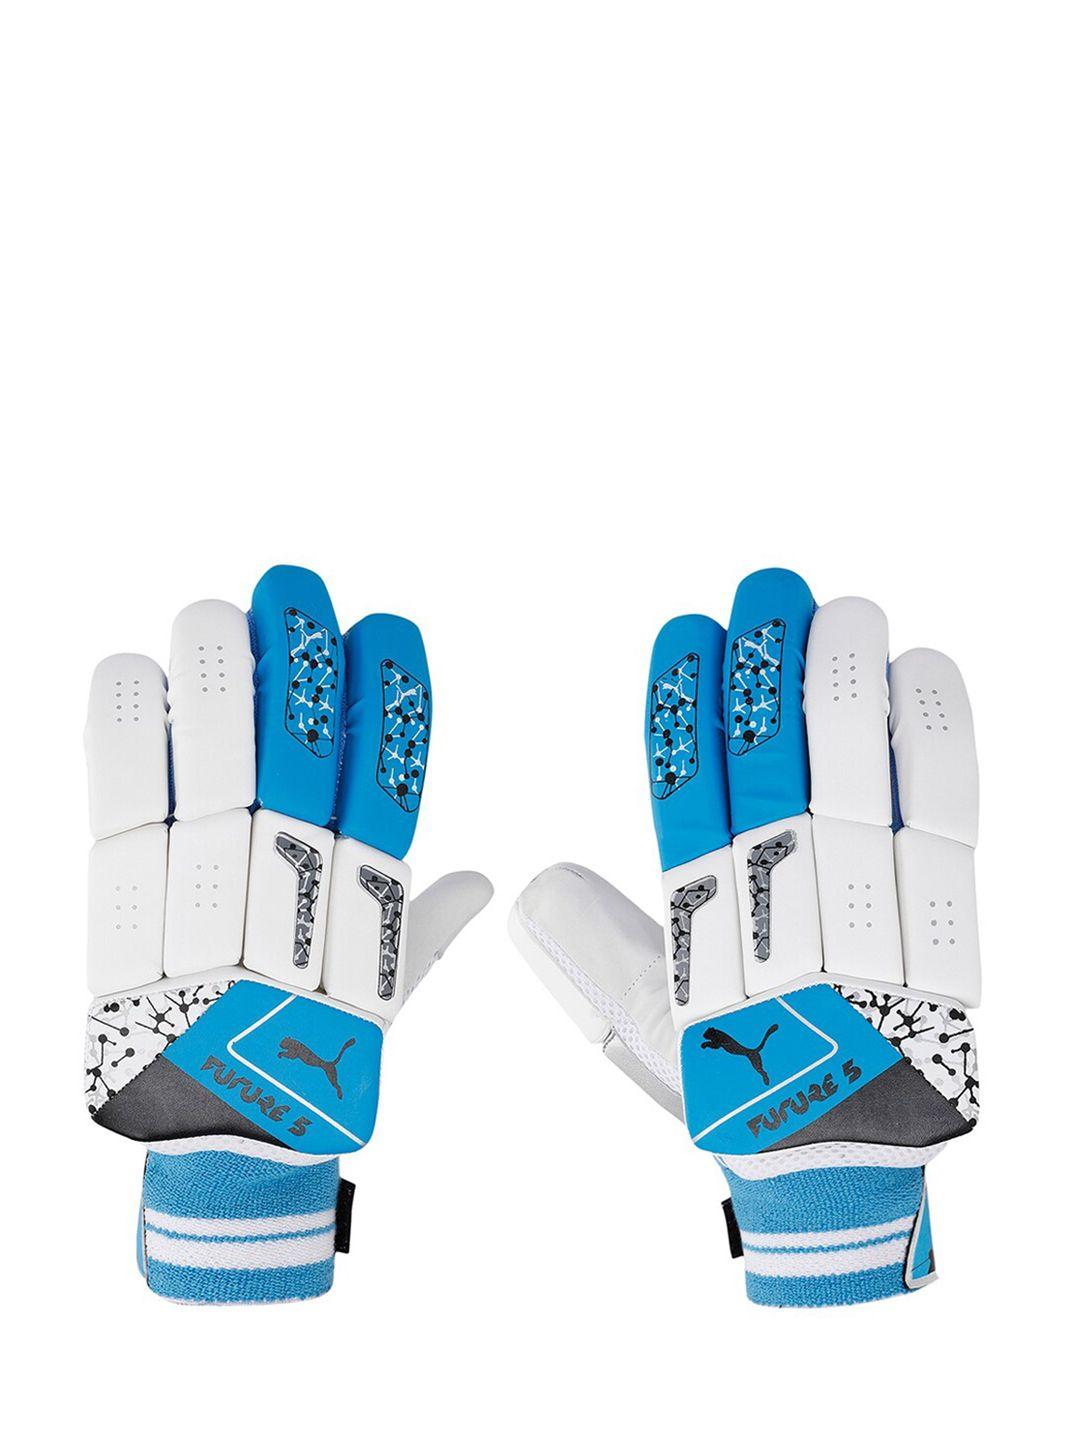 puma-blue-&-white-colourblocked-future-20.5-cricket-batting-gloves